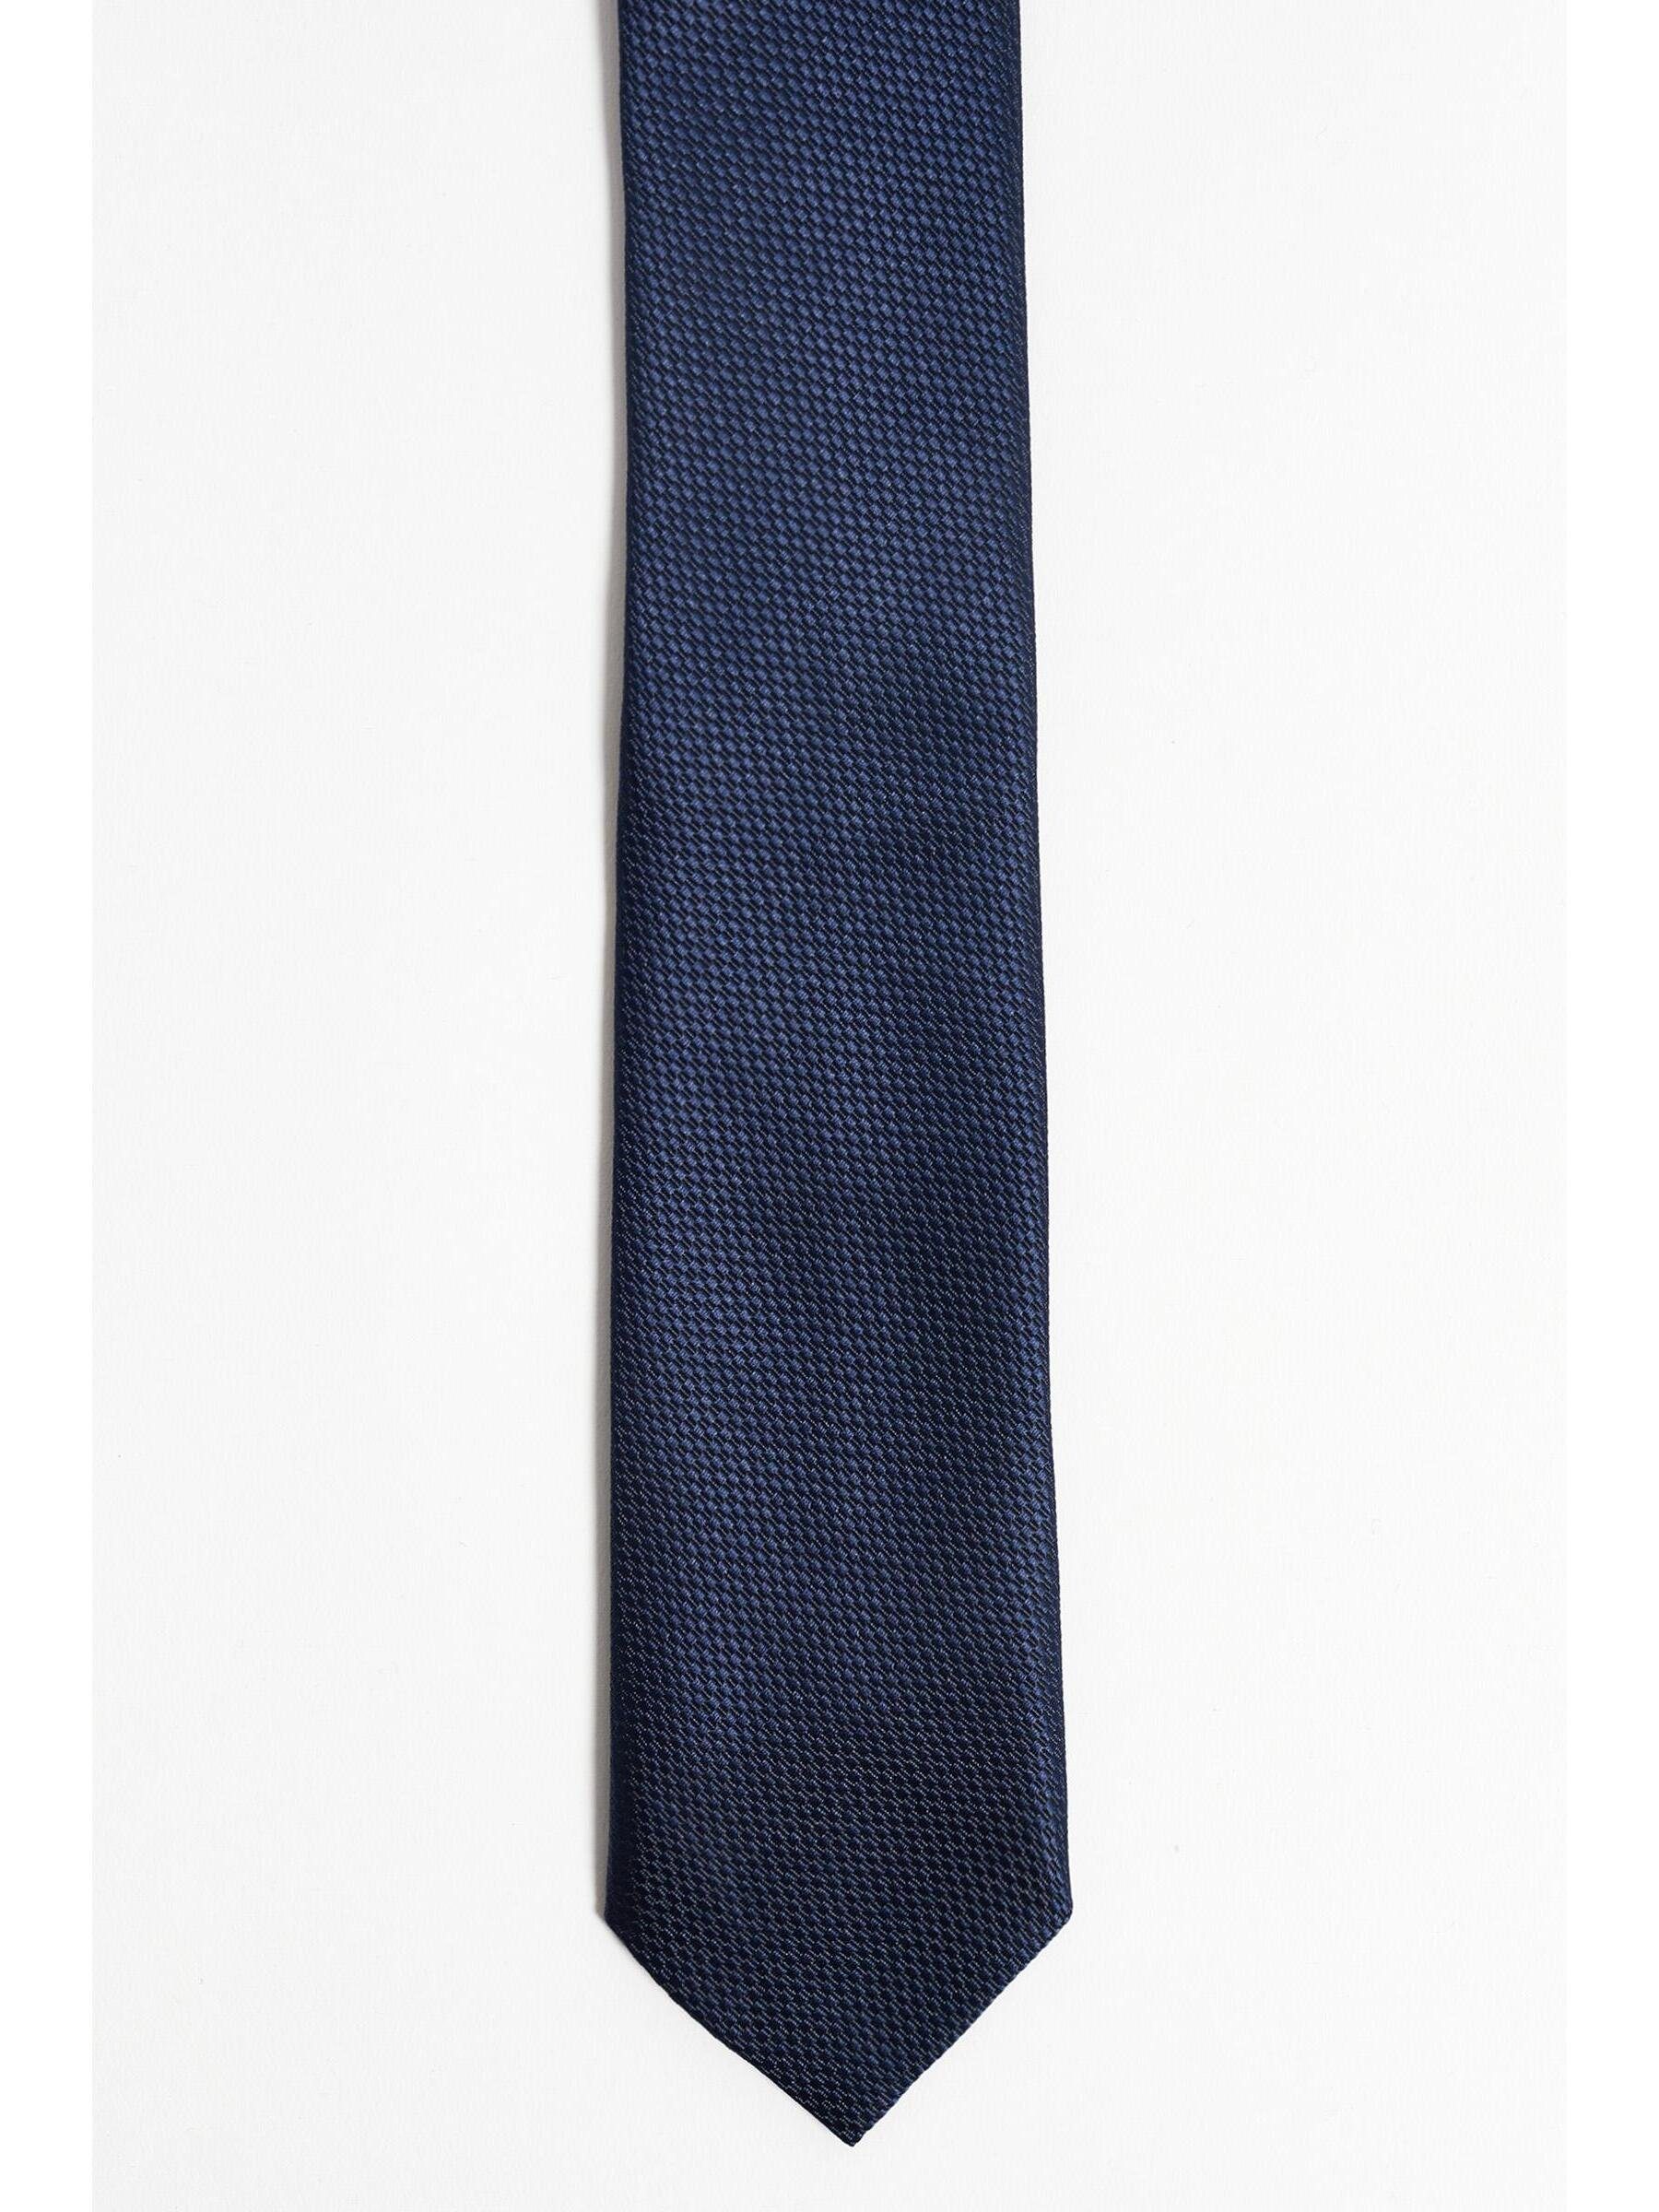 Krawatte Fashion WE Dunkelblau